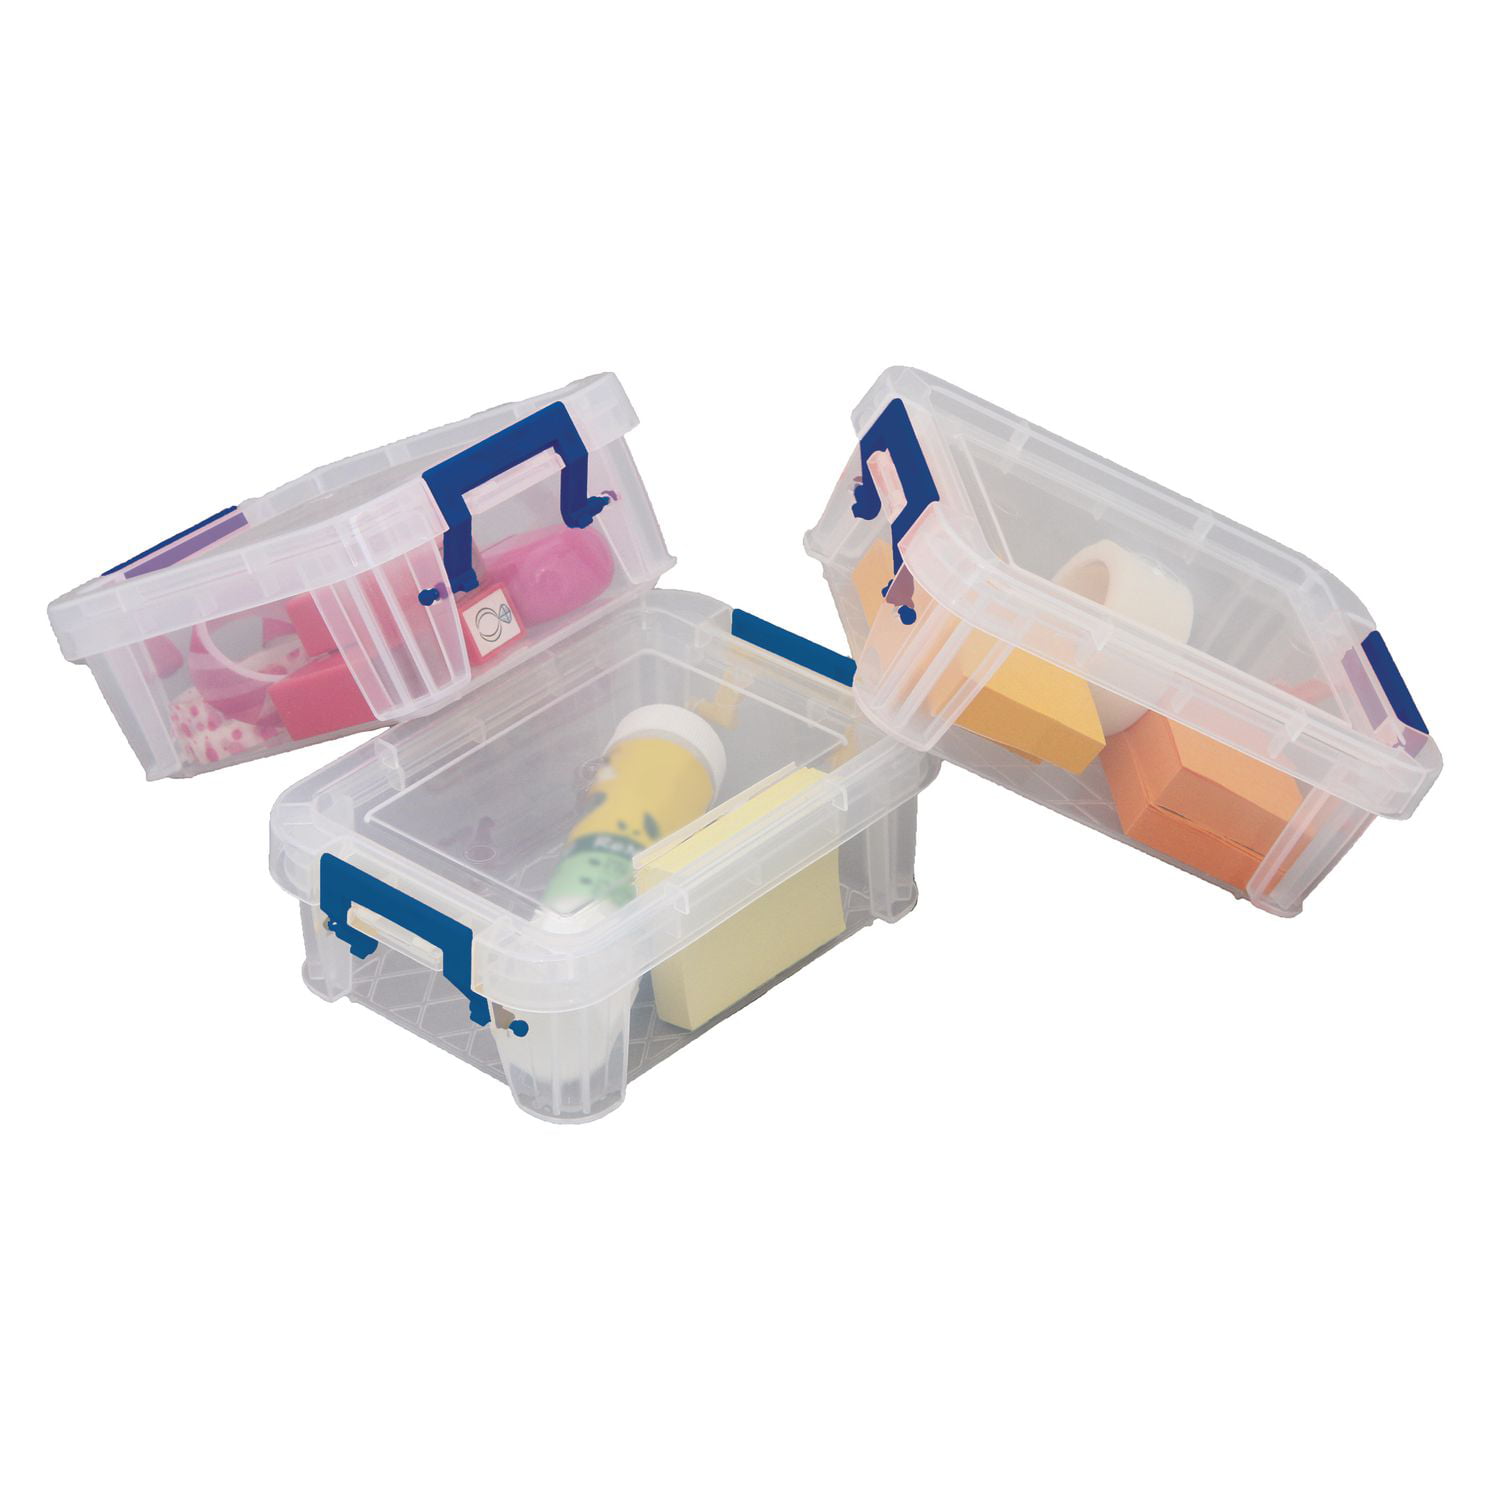 Bankers Box Plastic Storage - 18.5L